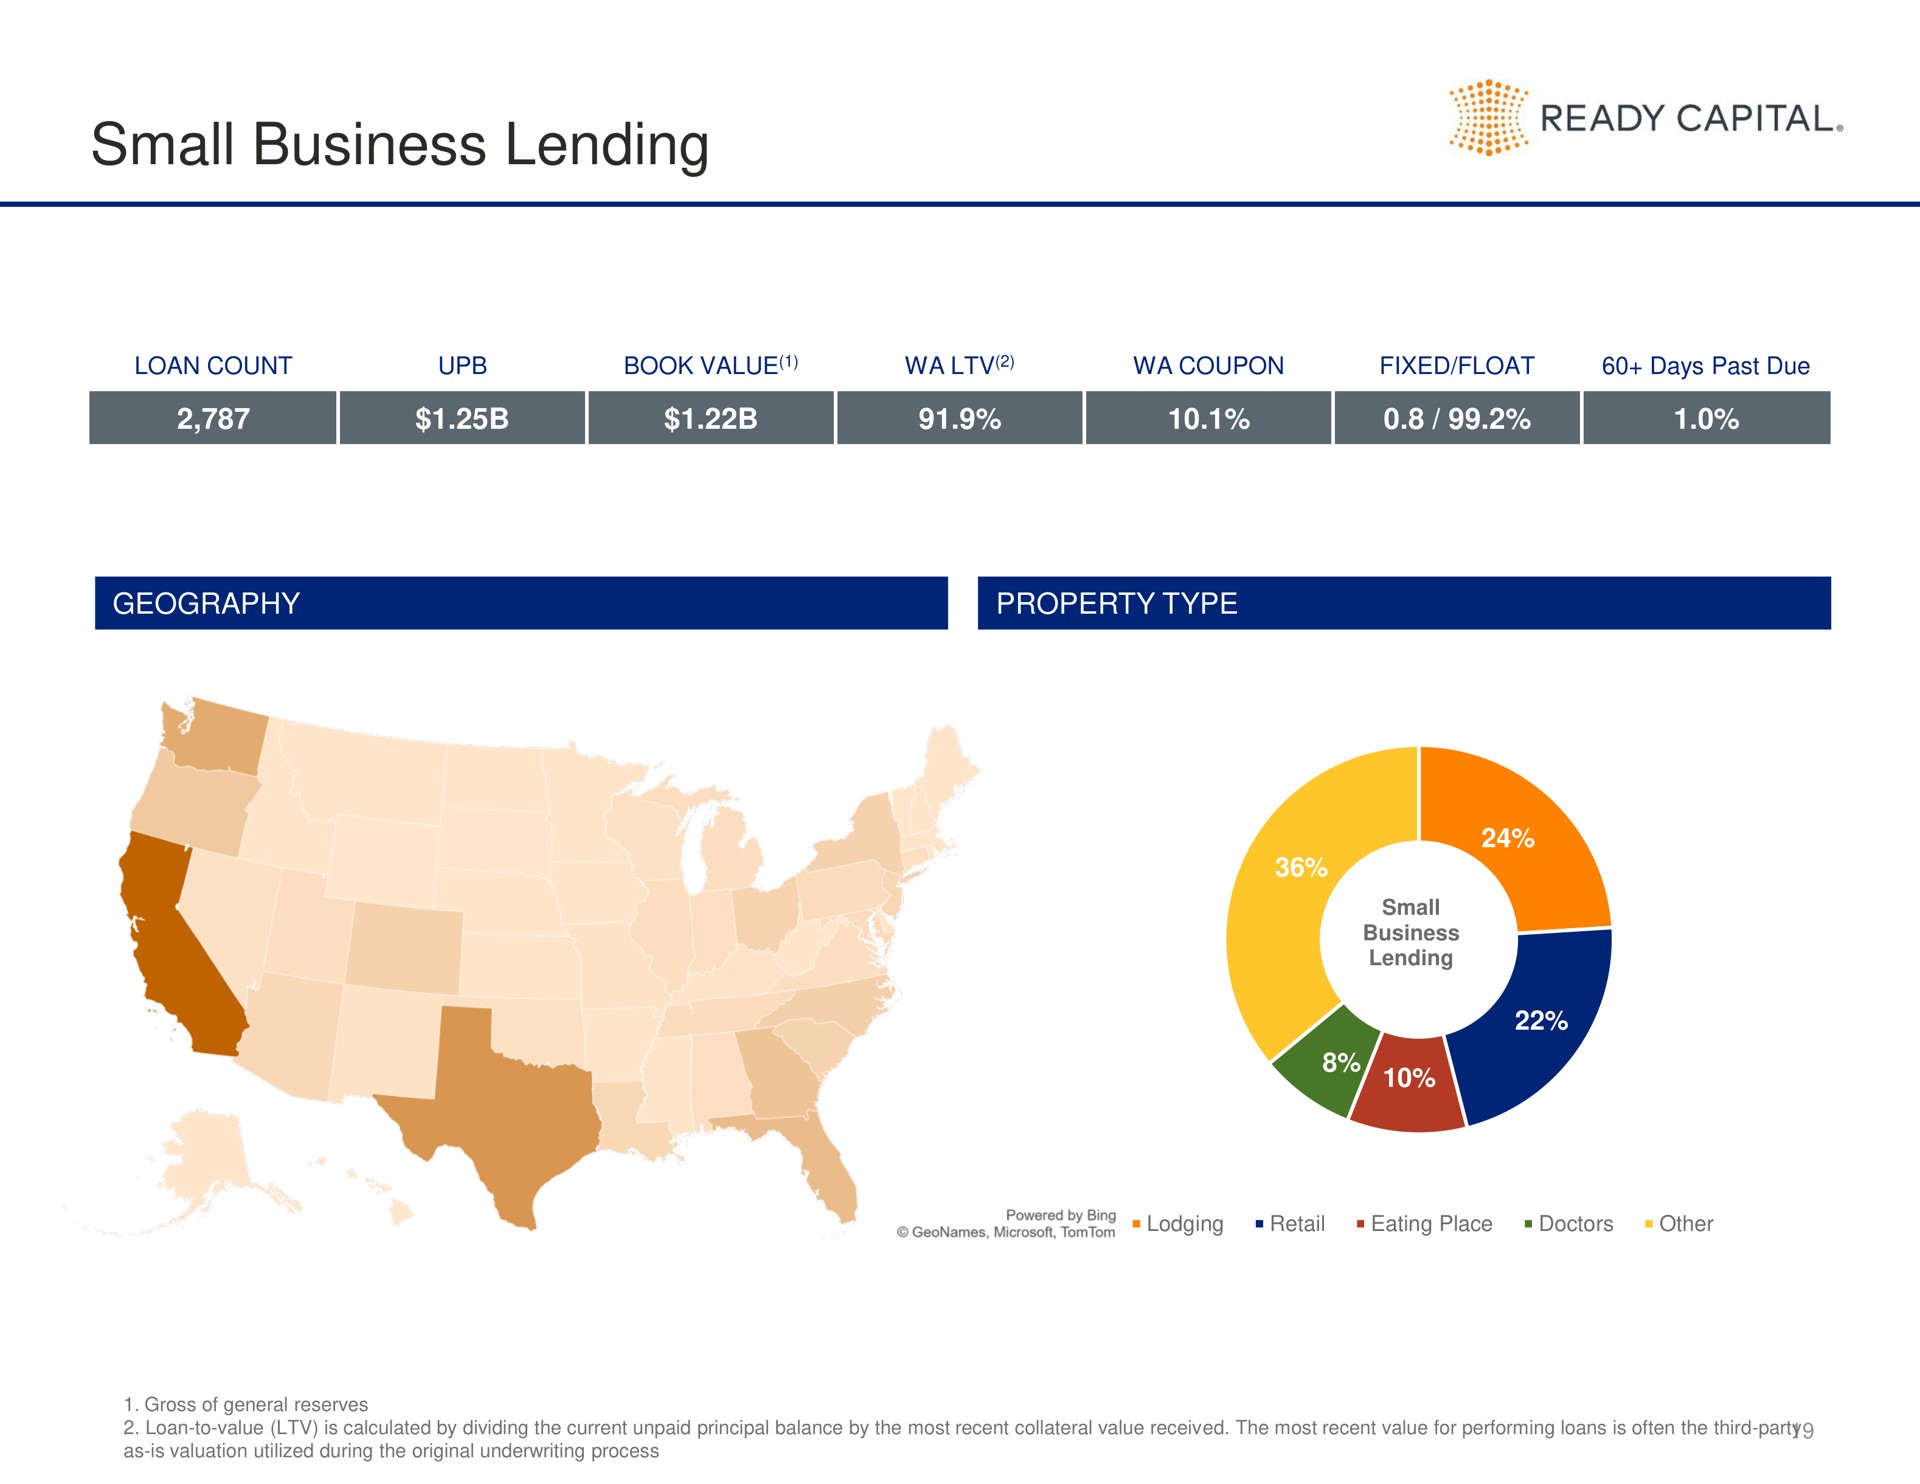 small business lending ready capital i | Ready Capital